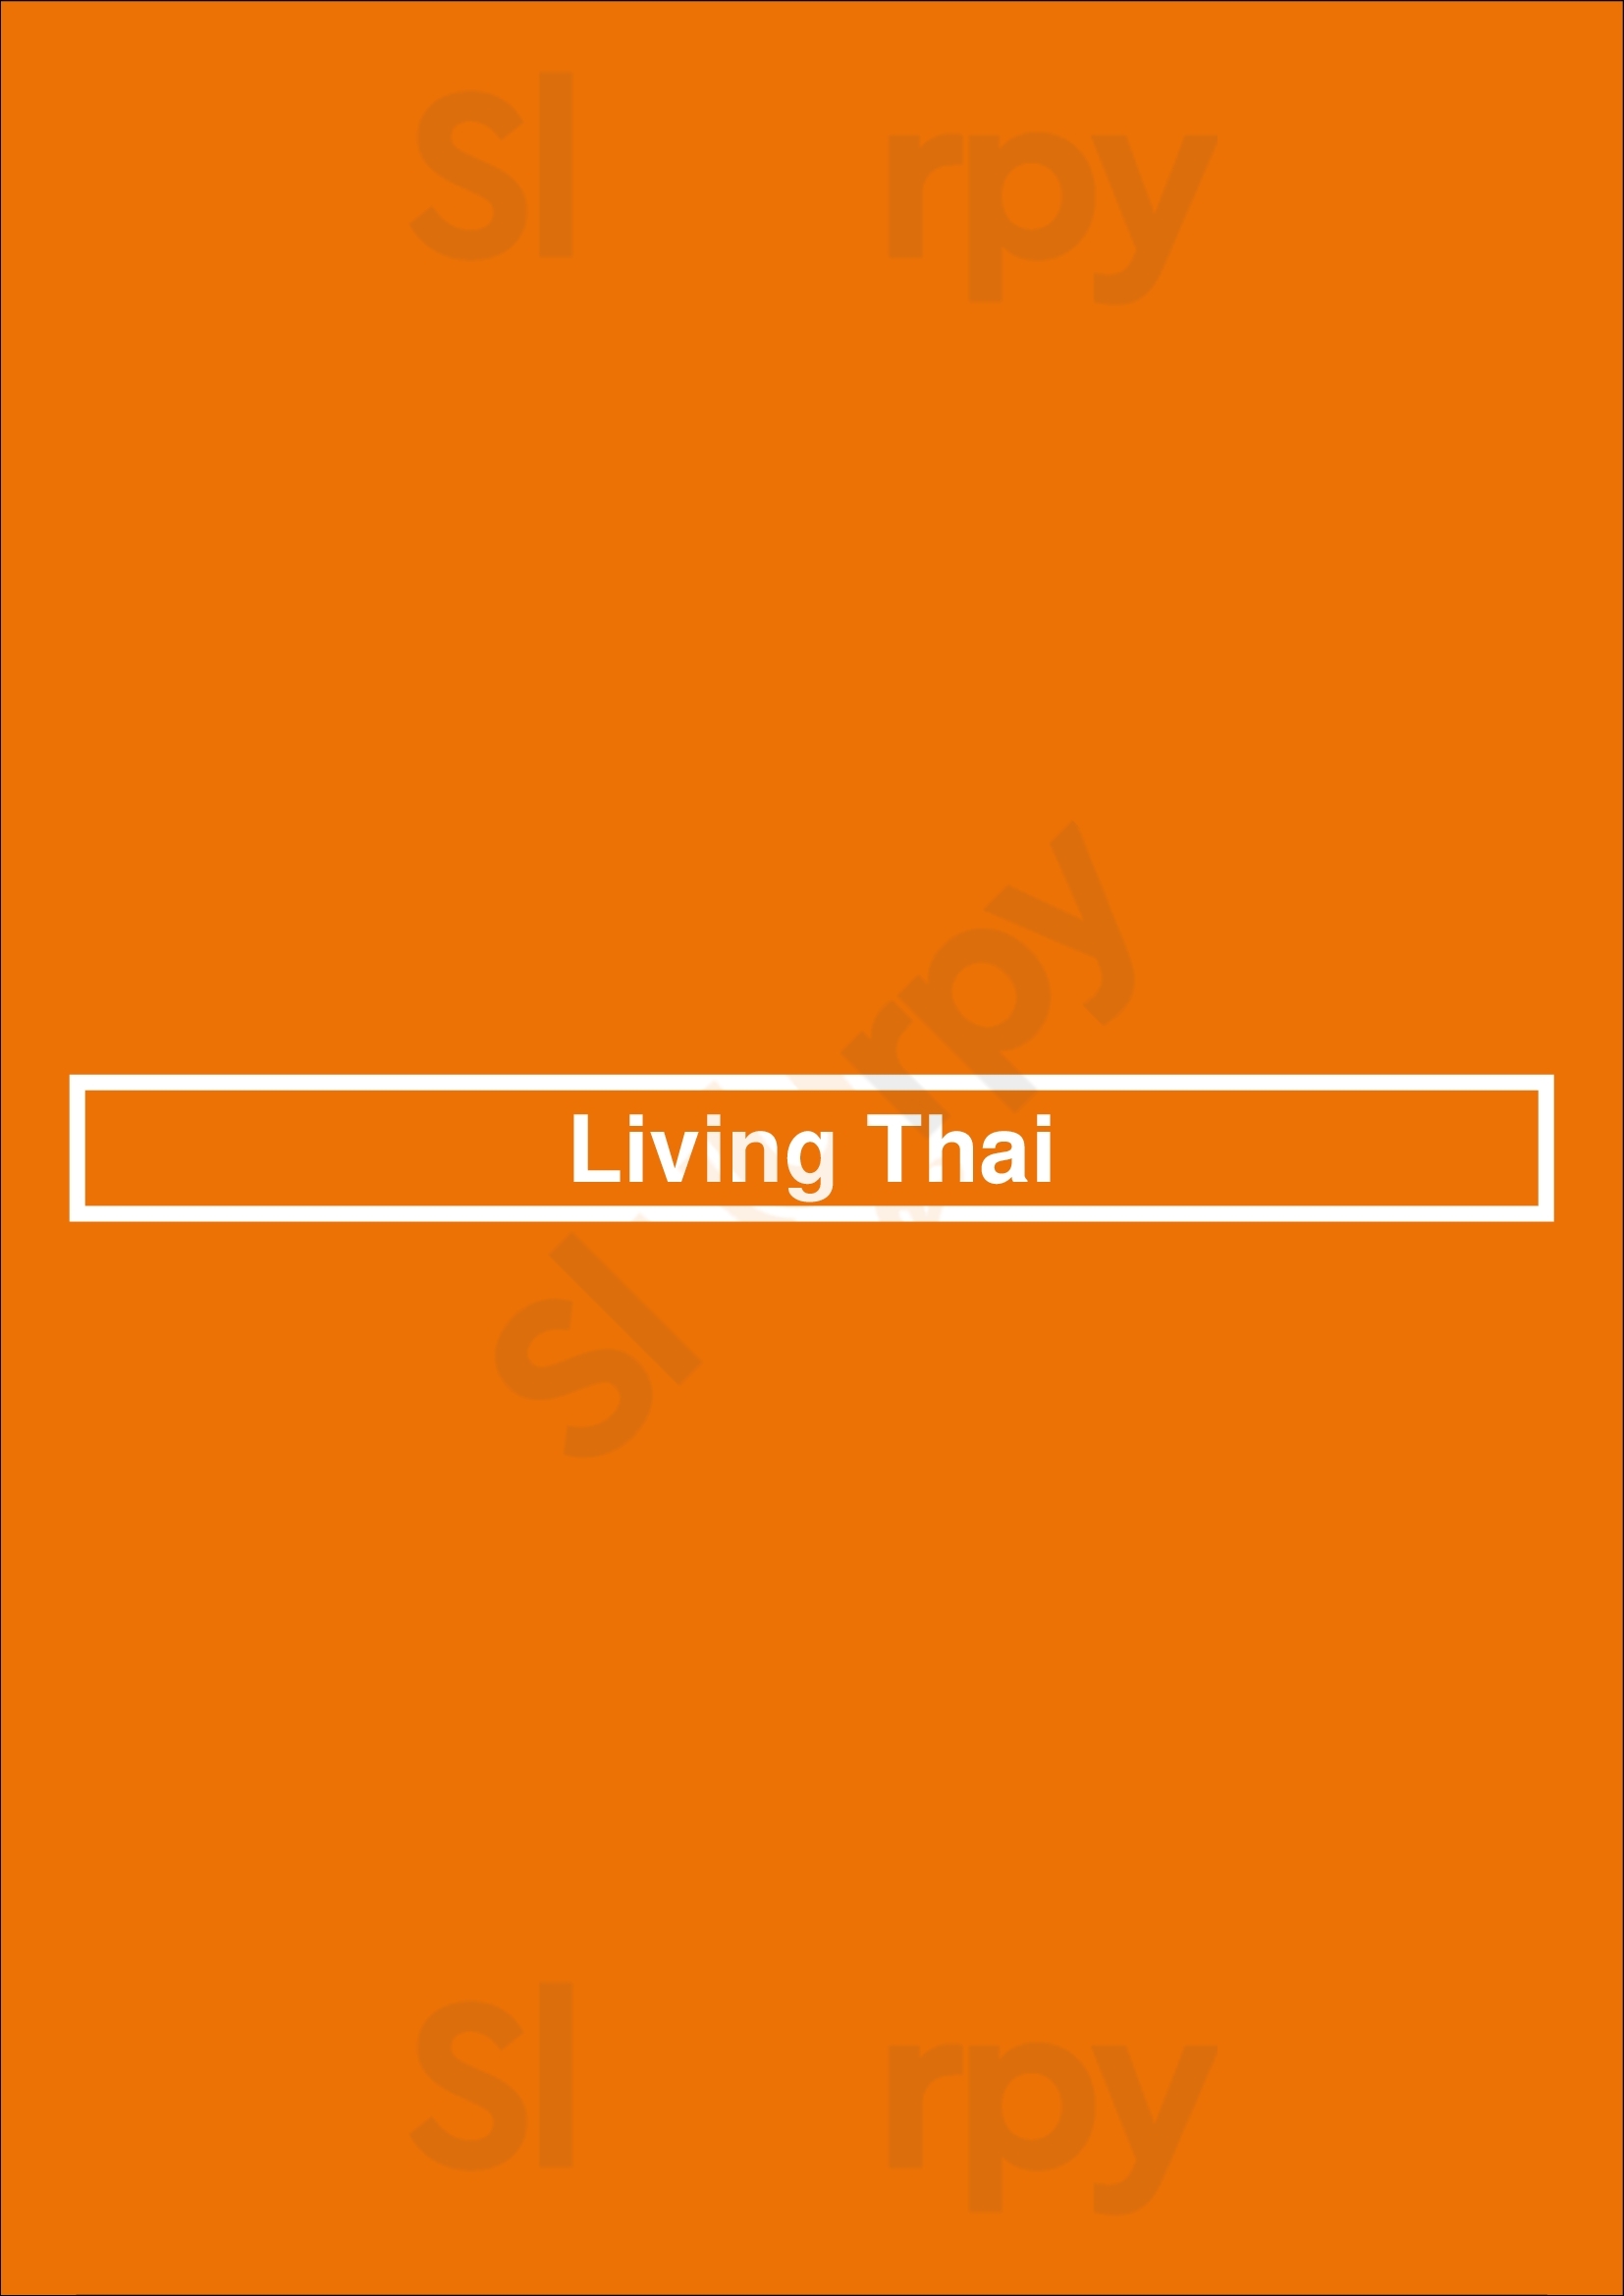 Living Thai New York City Menu - 1